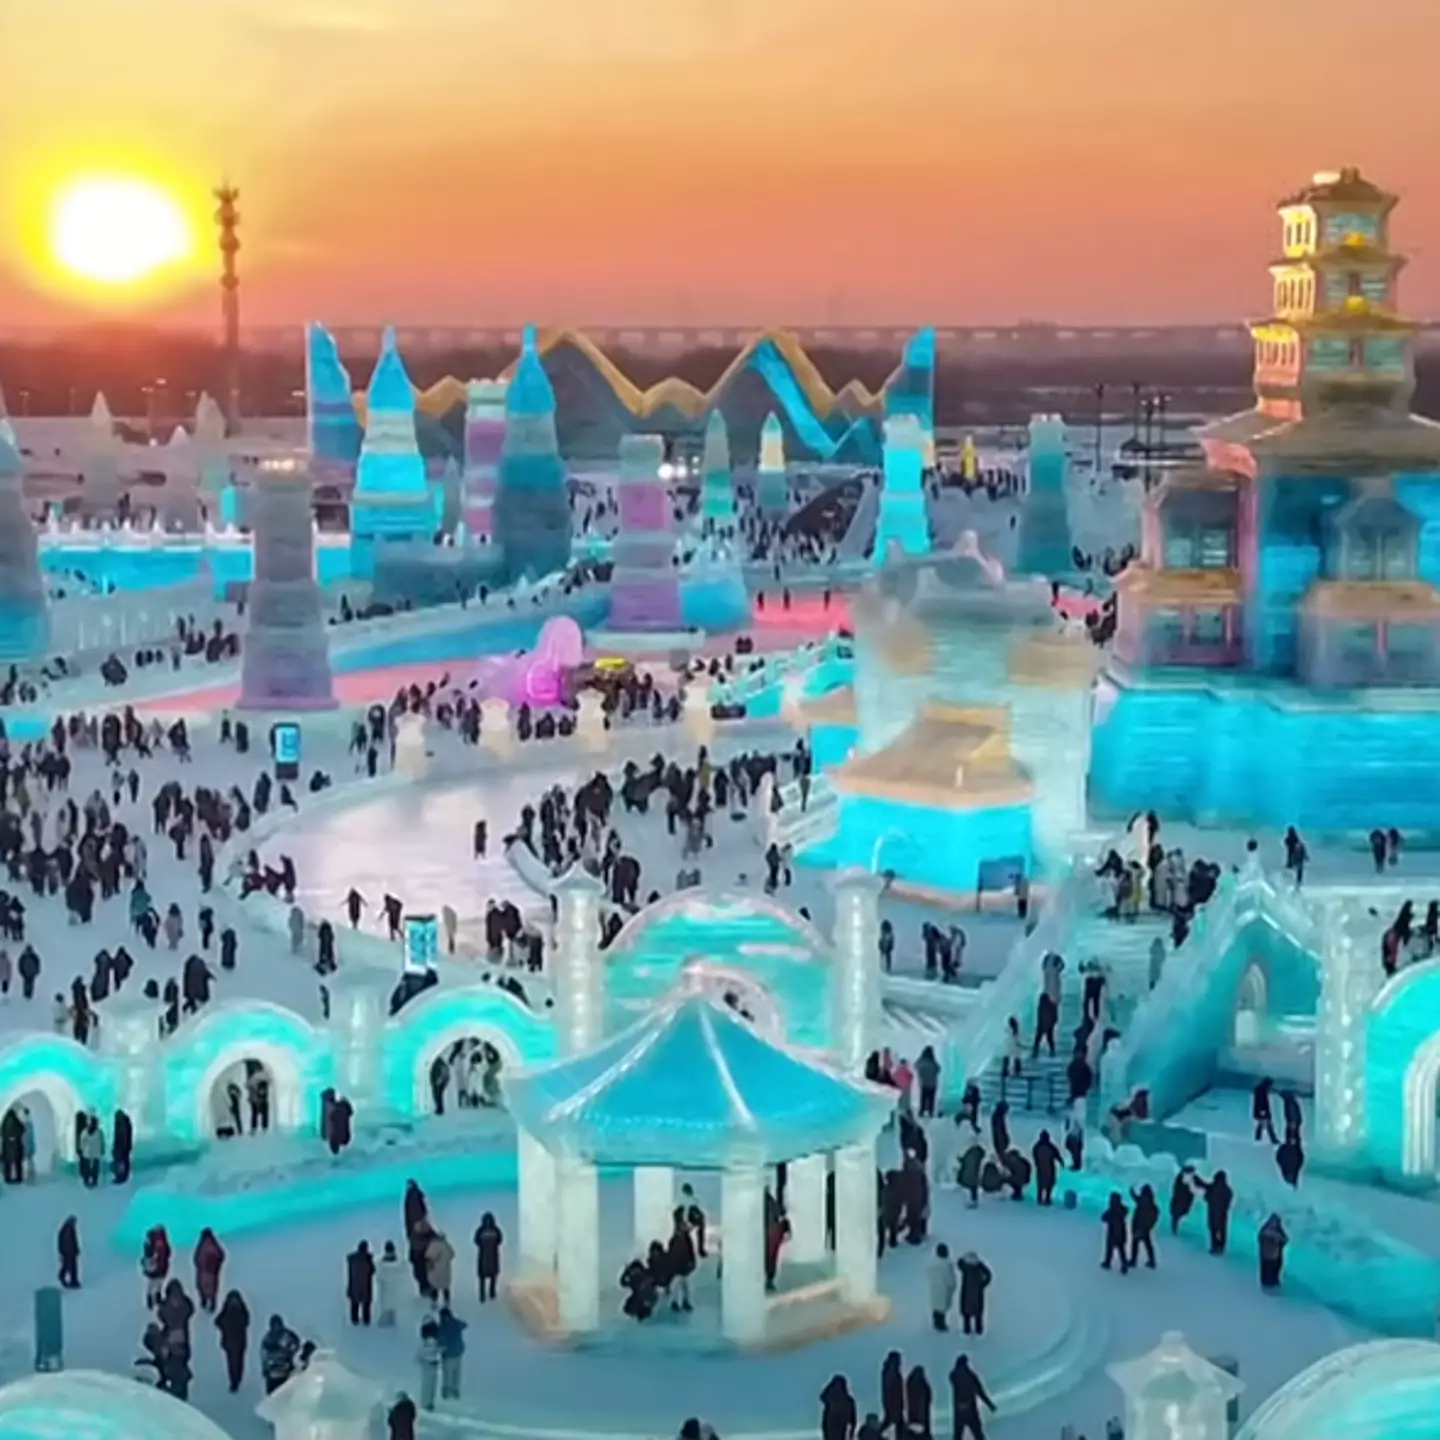 China unveils the world's largest ice city